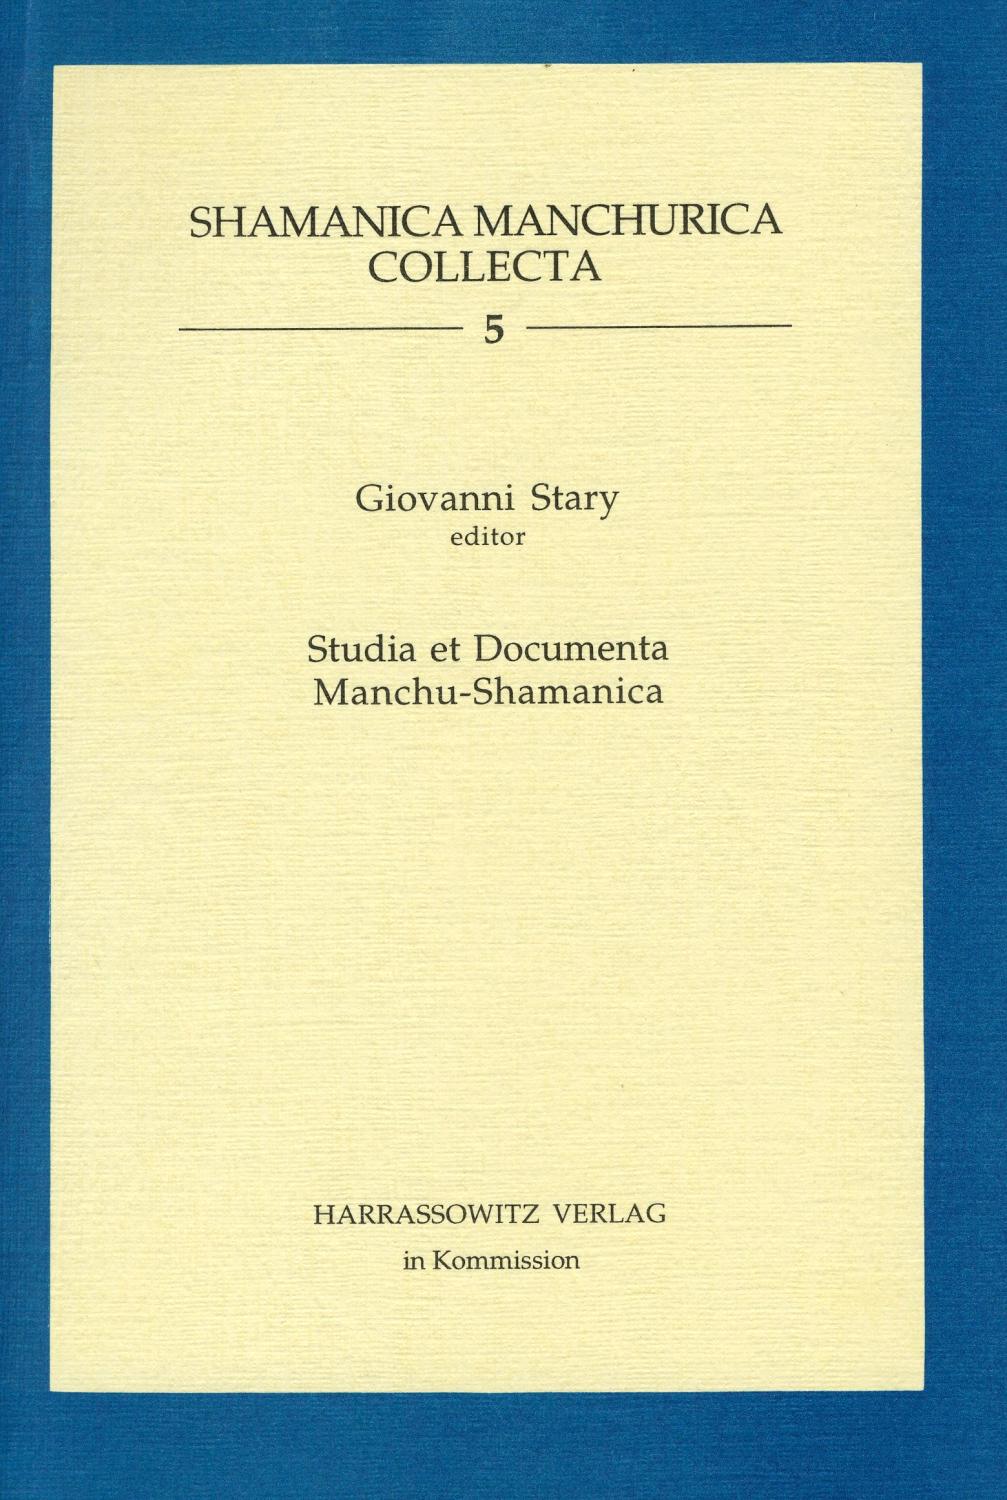 Studia Et Documenta Manchu-Shamanica (Shamanica Manchurica Collecta) - Stary, Giovanni